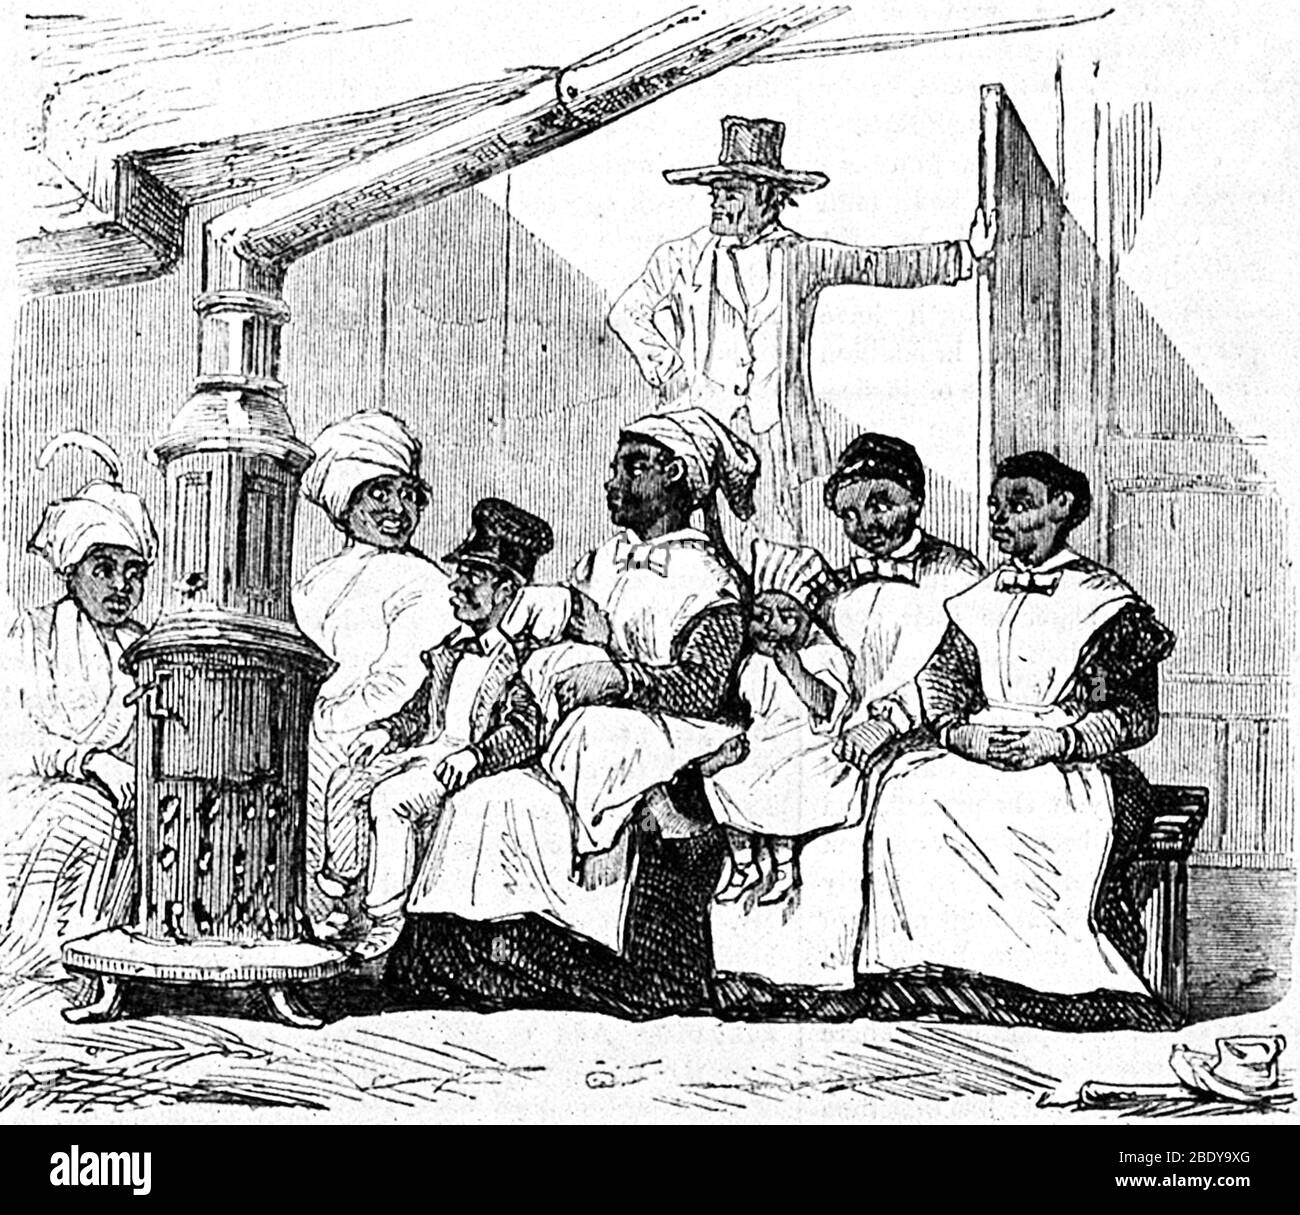 Esclavos esperando ser vendidos, Virginia, 1857 Foto de stock